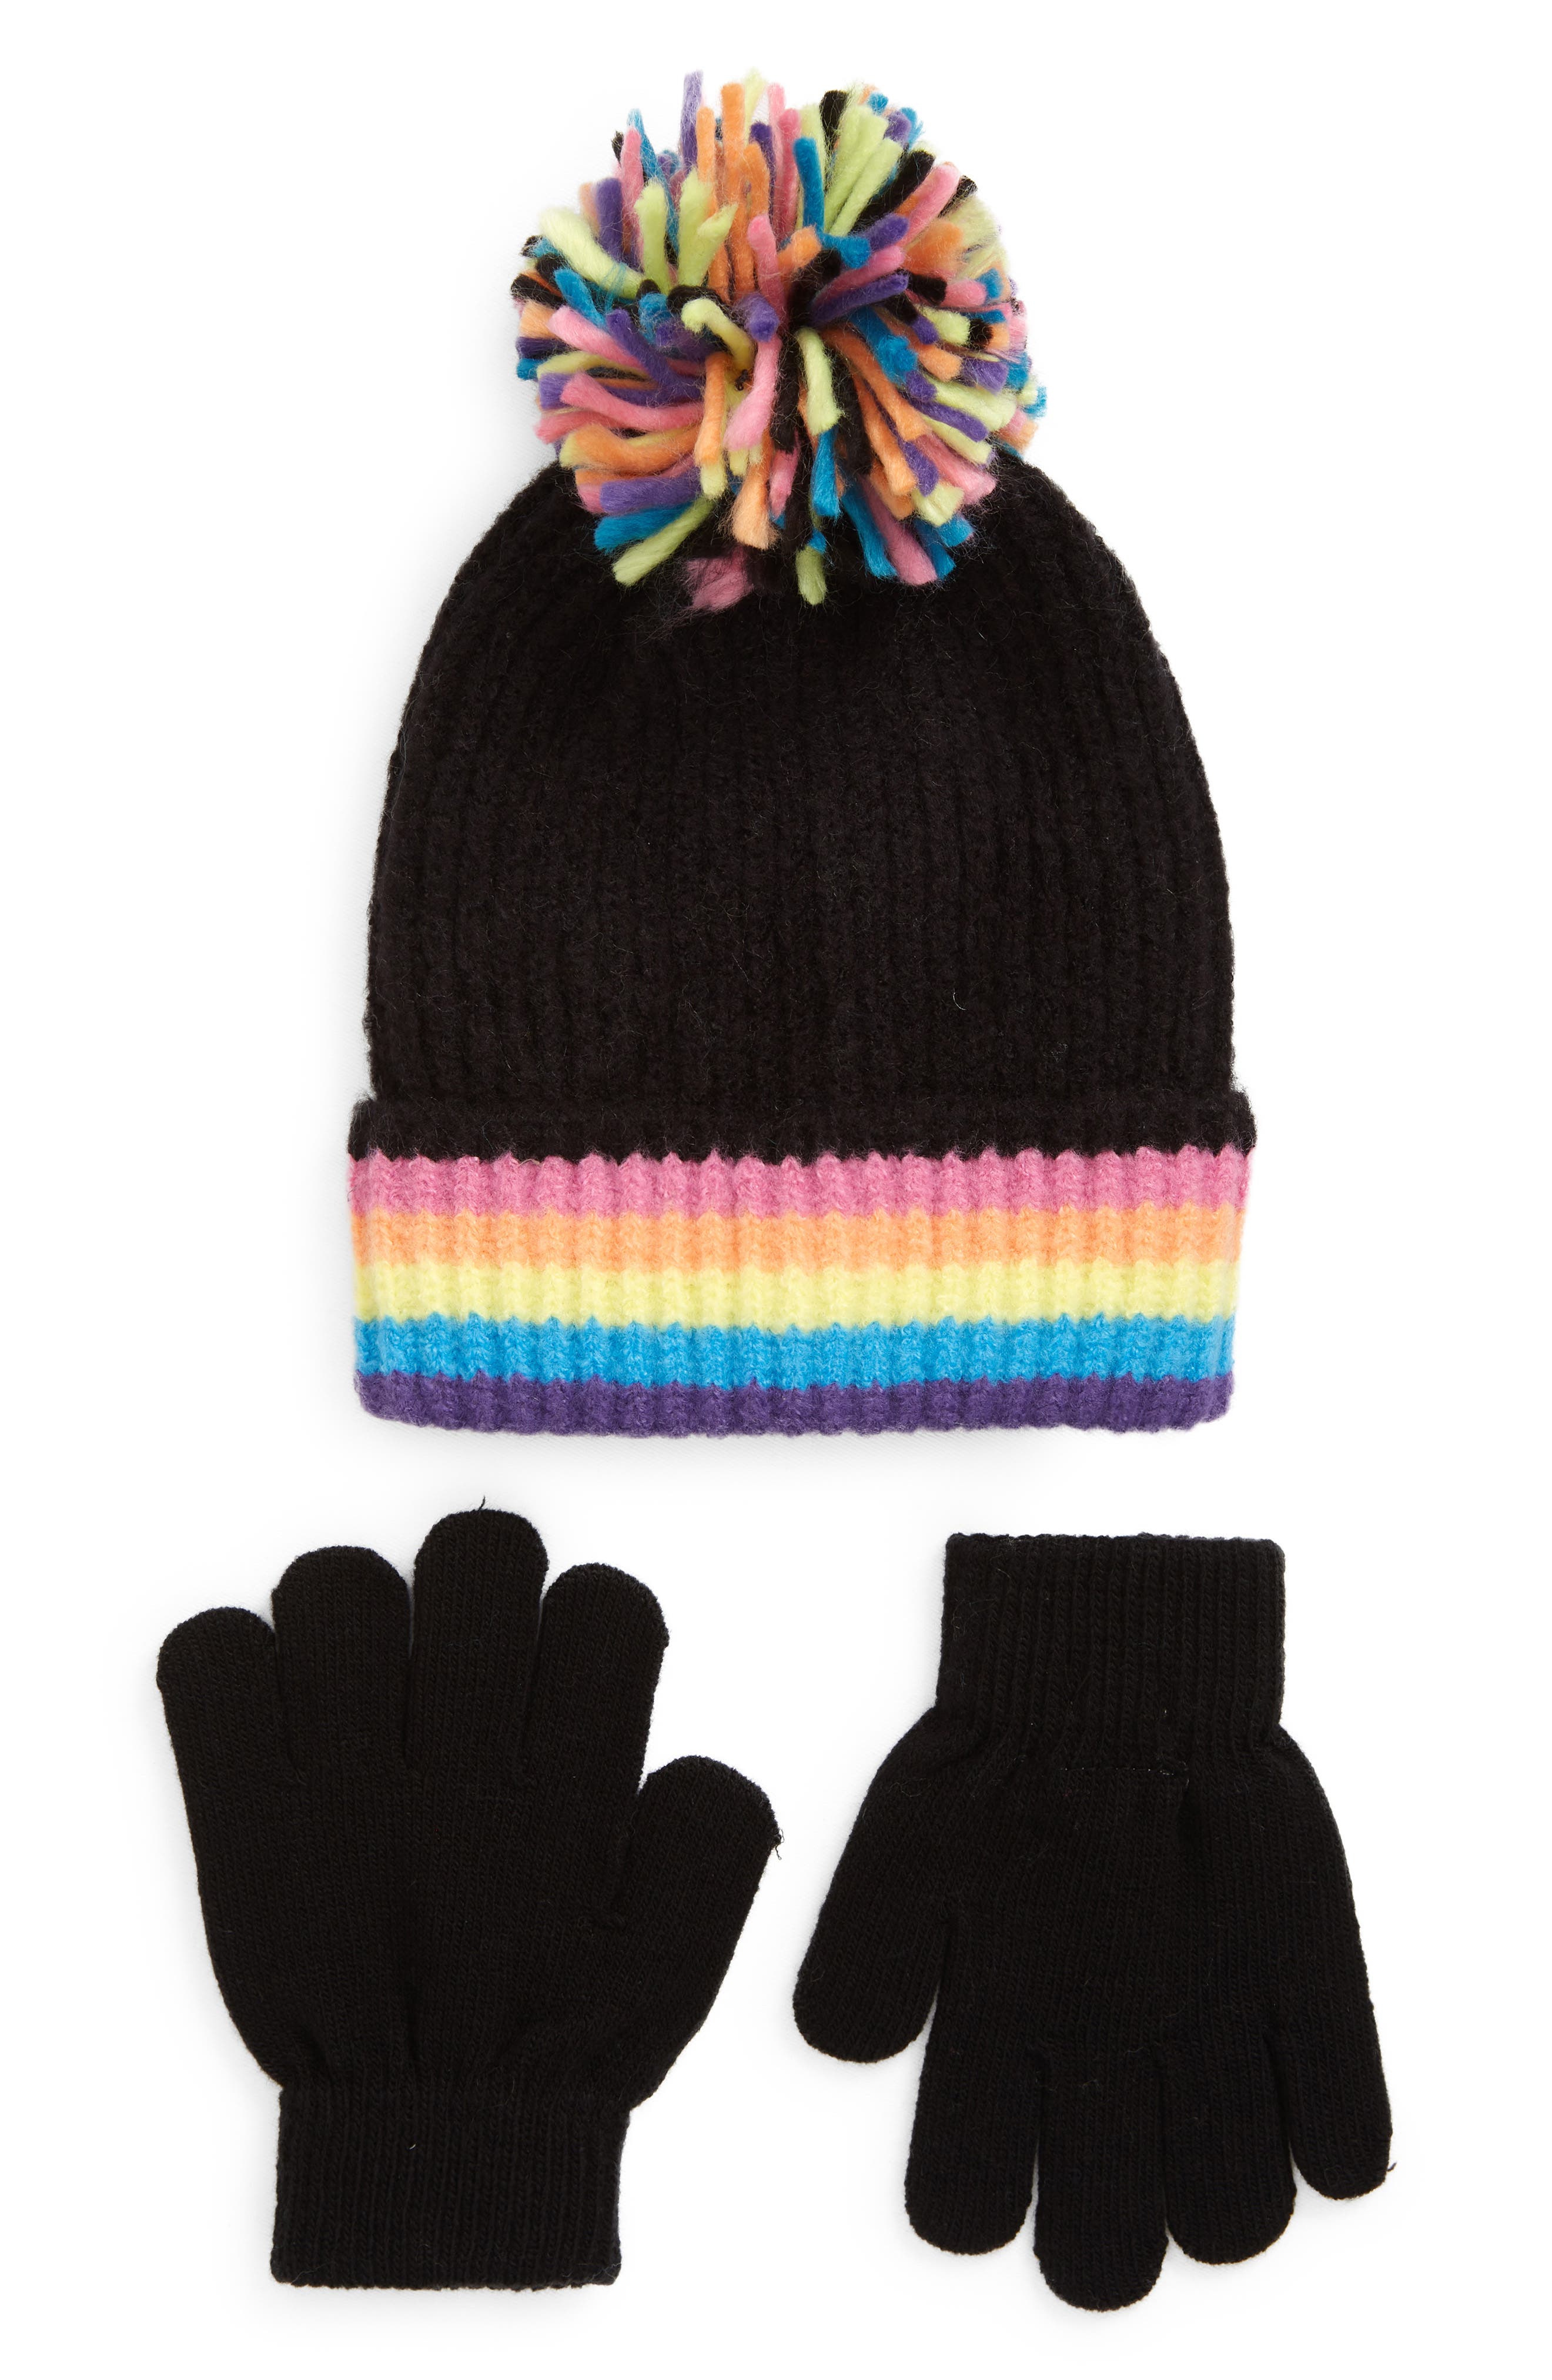 KIDS FASHION Accessories Pink/Gray discount 62% H&M gloves 